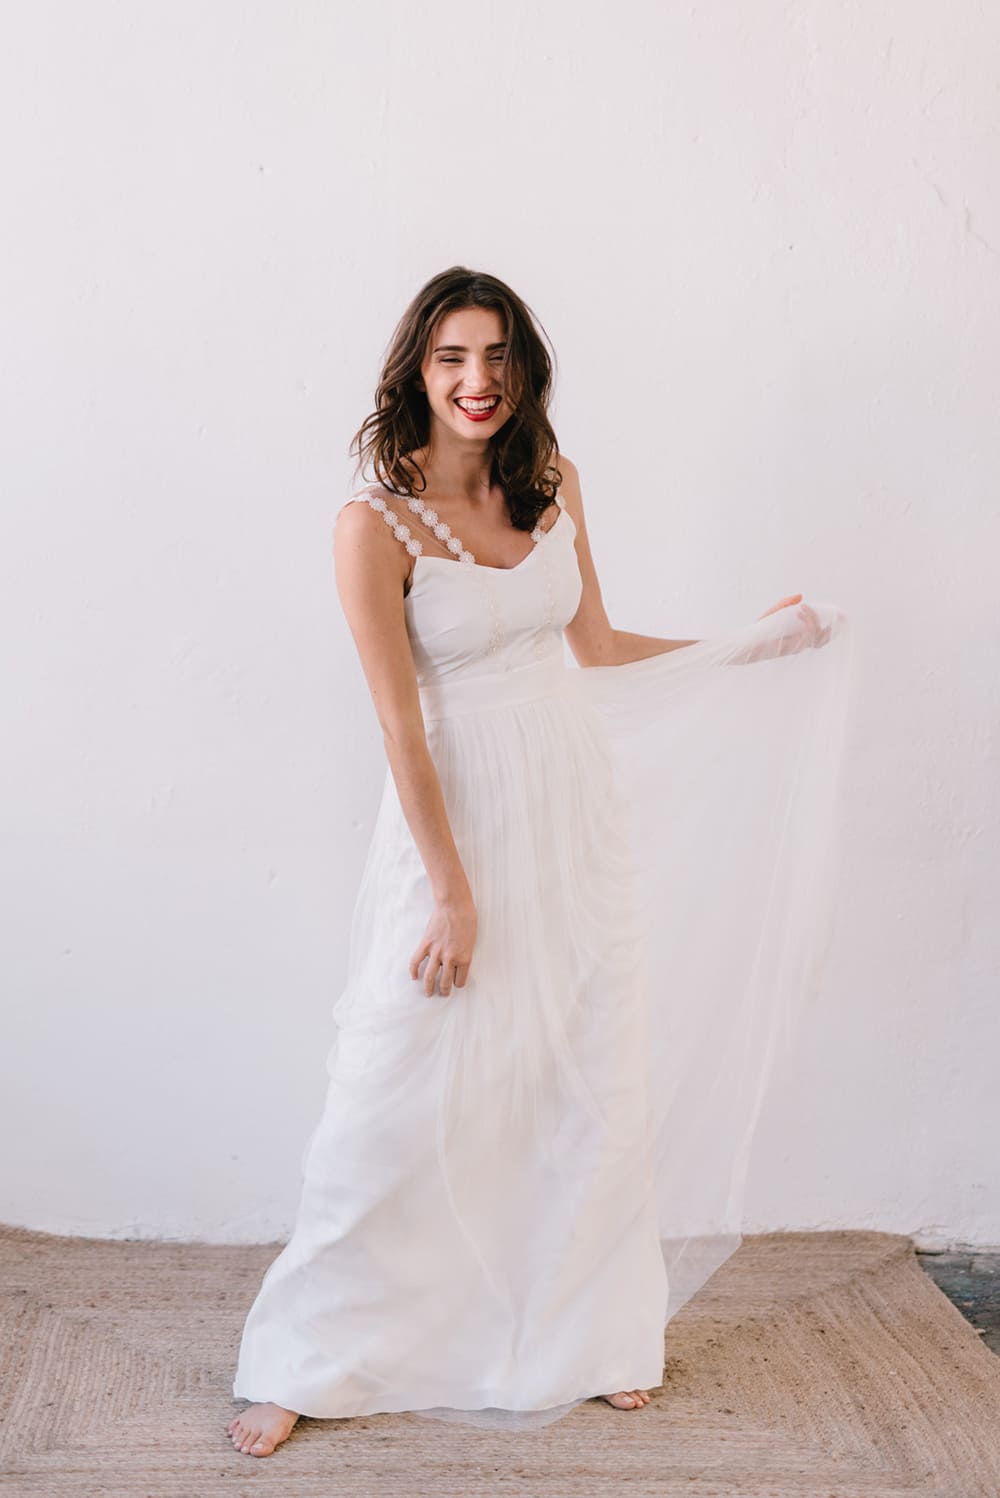 Robe de mariée KANDY 2018 par Aurélia Hoang